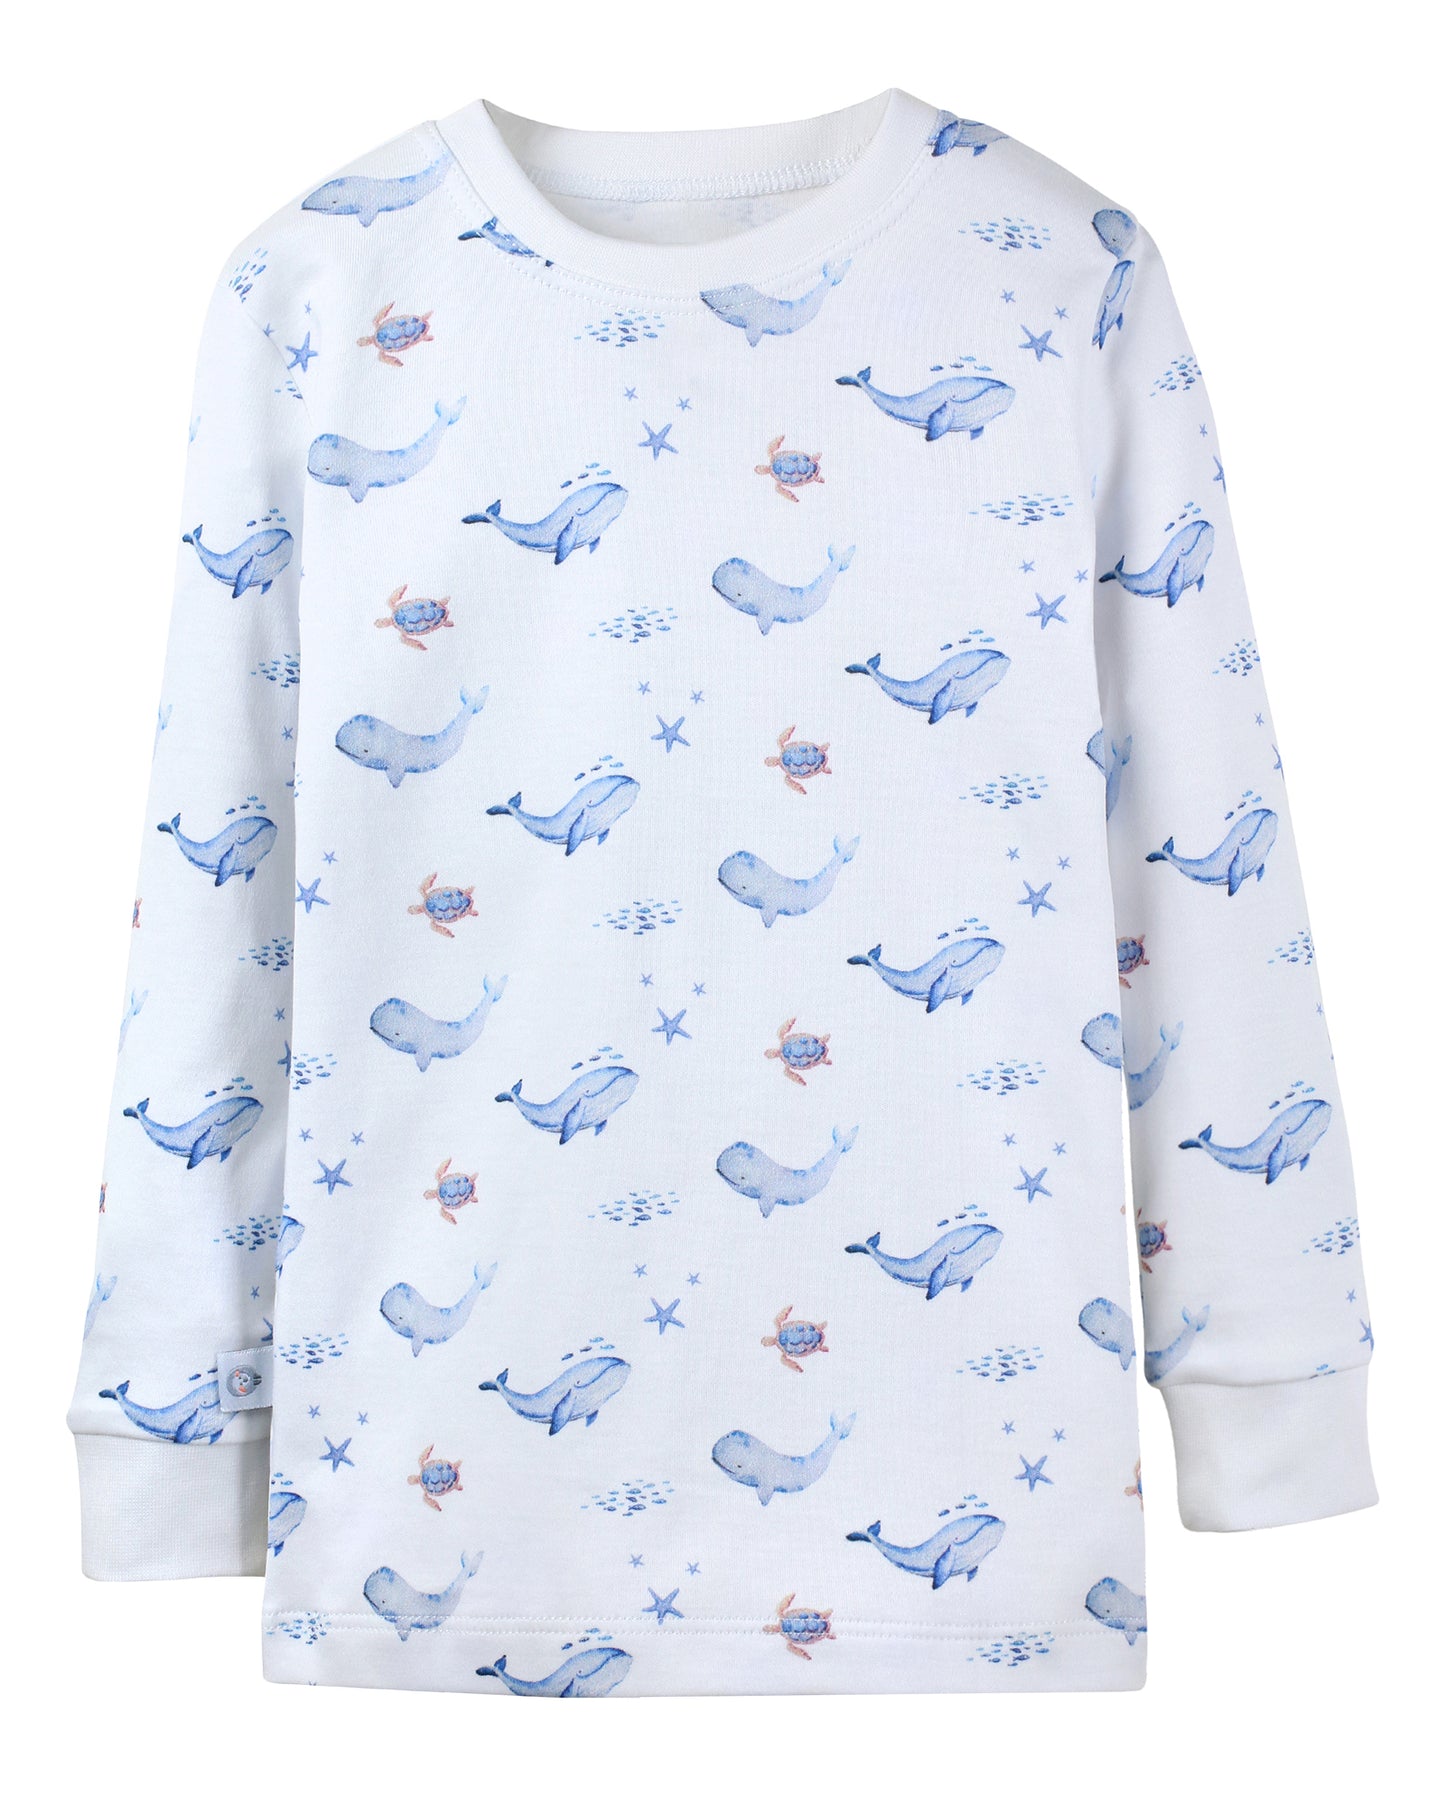 Whales and Turtles Long Pajama Set